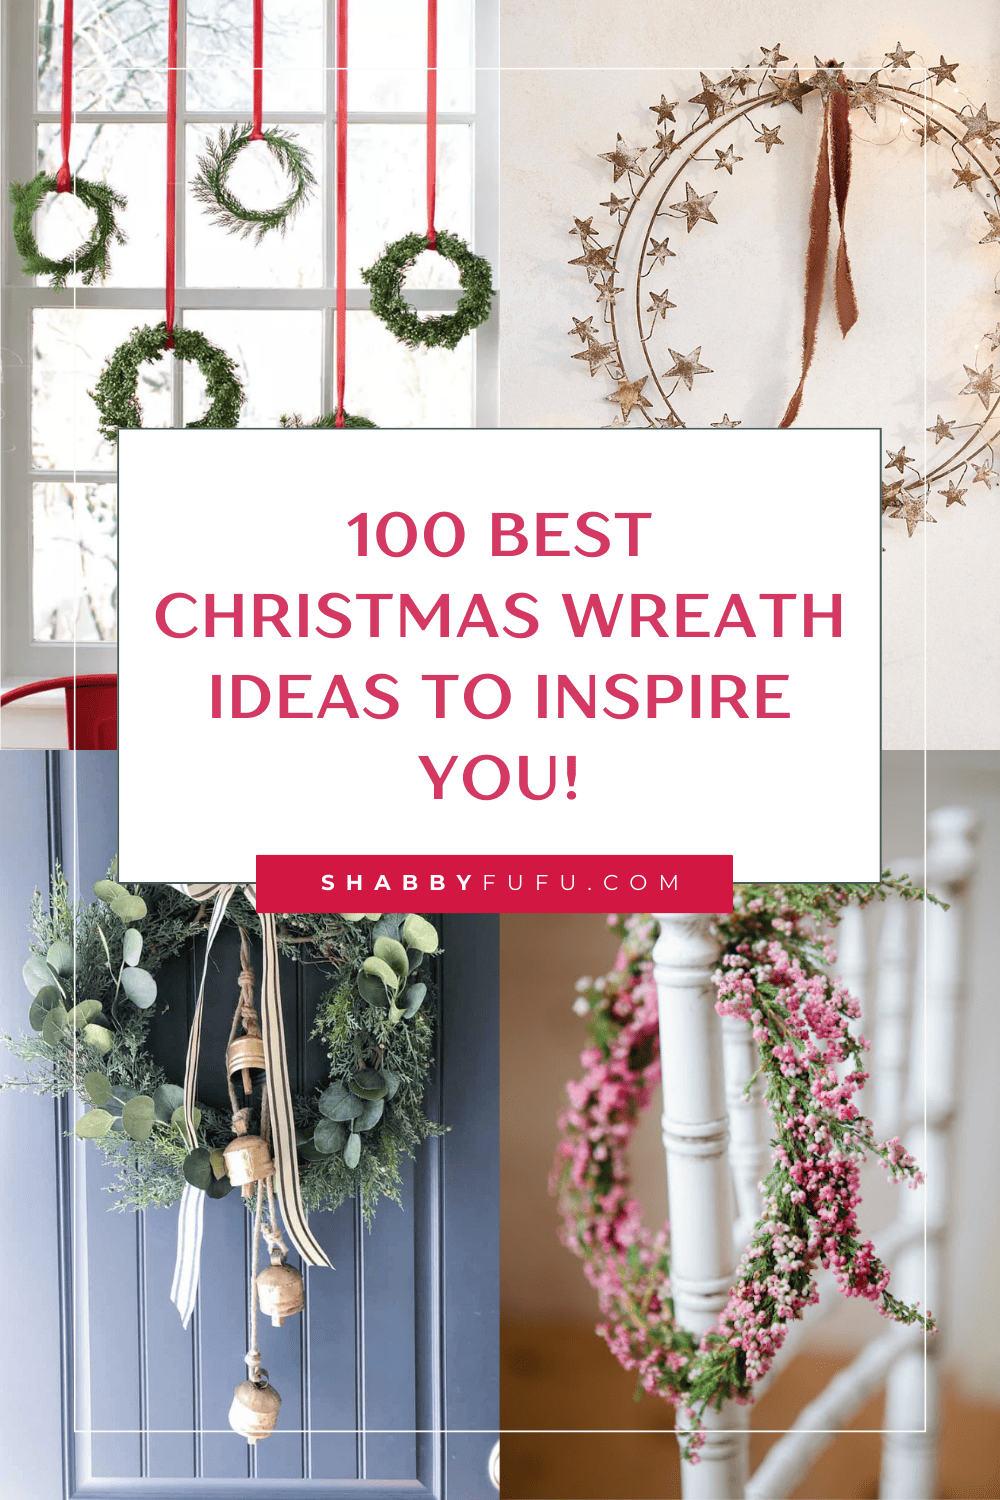 Decorative Pinterest collage featuring different wreath ideas